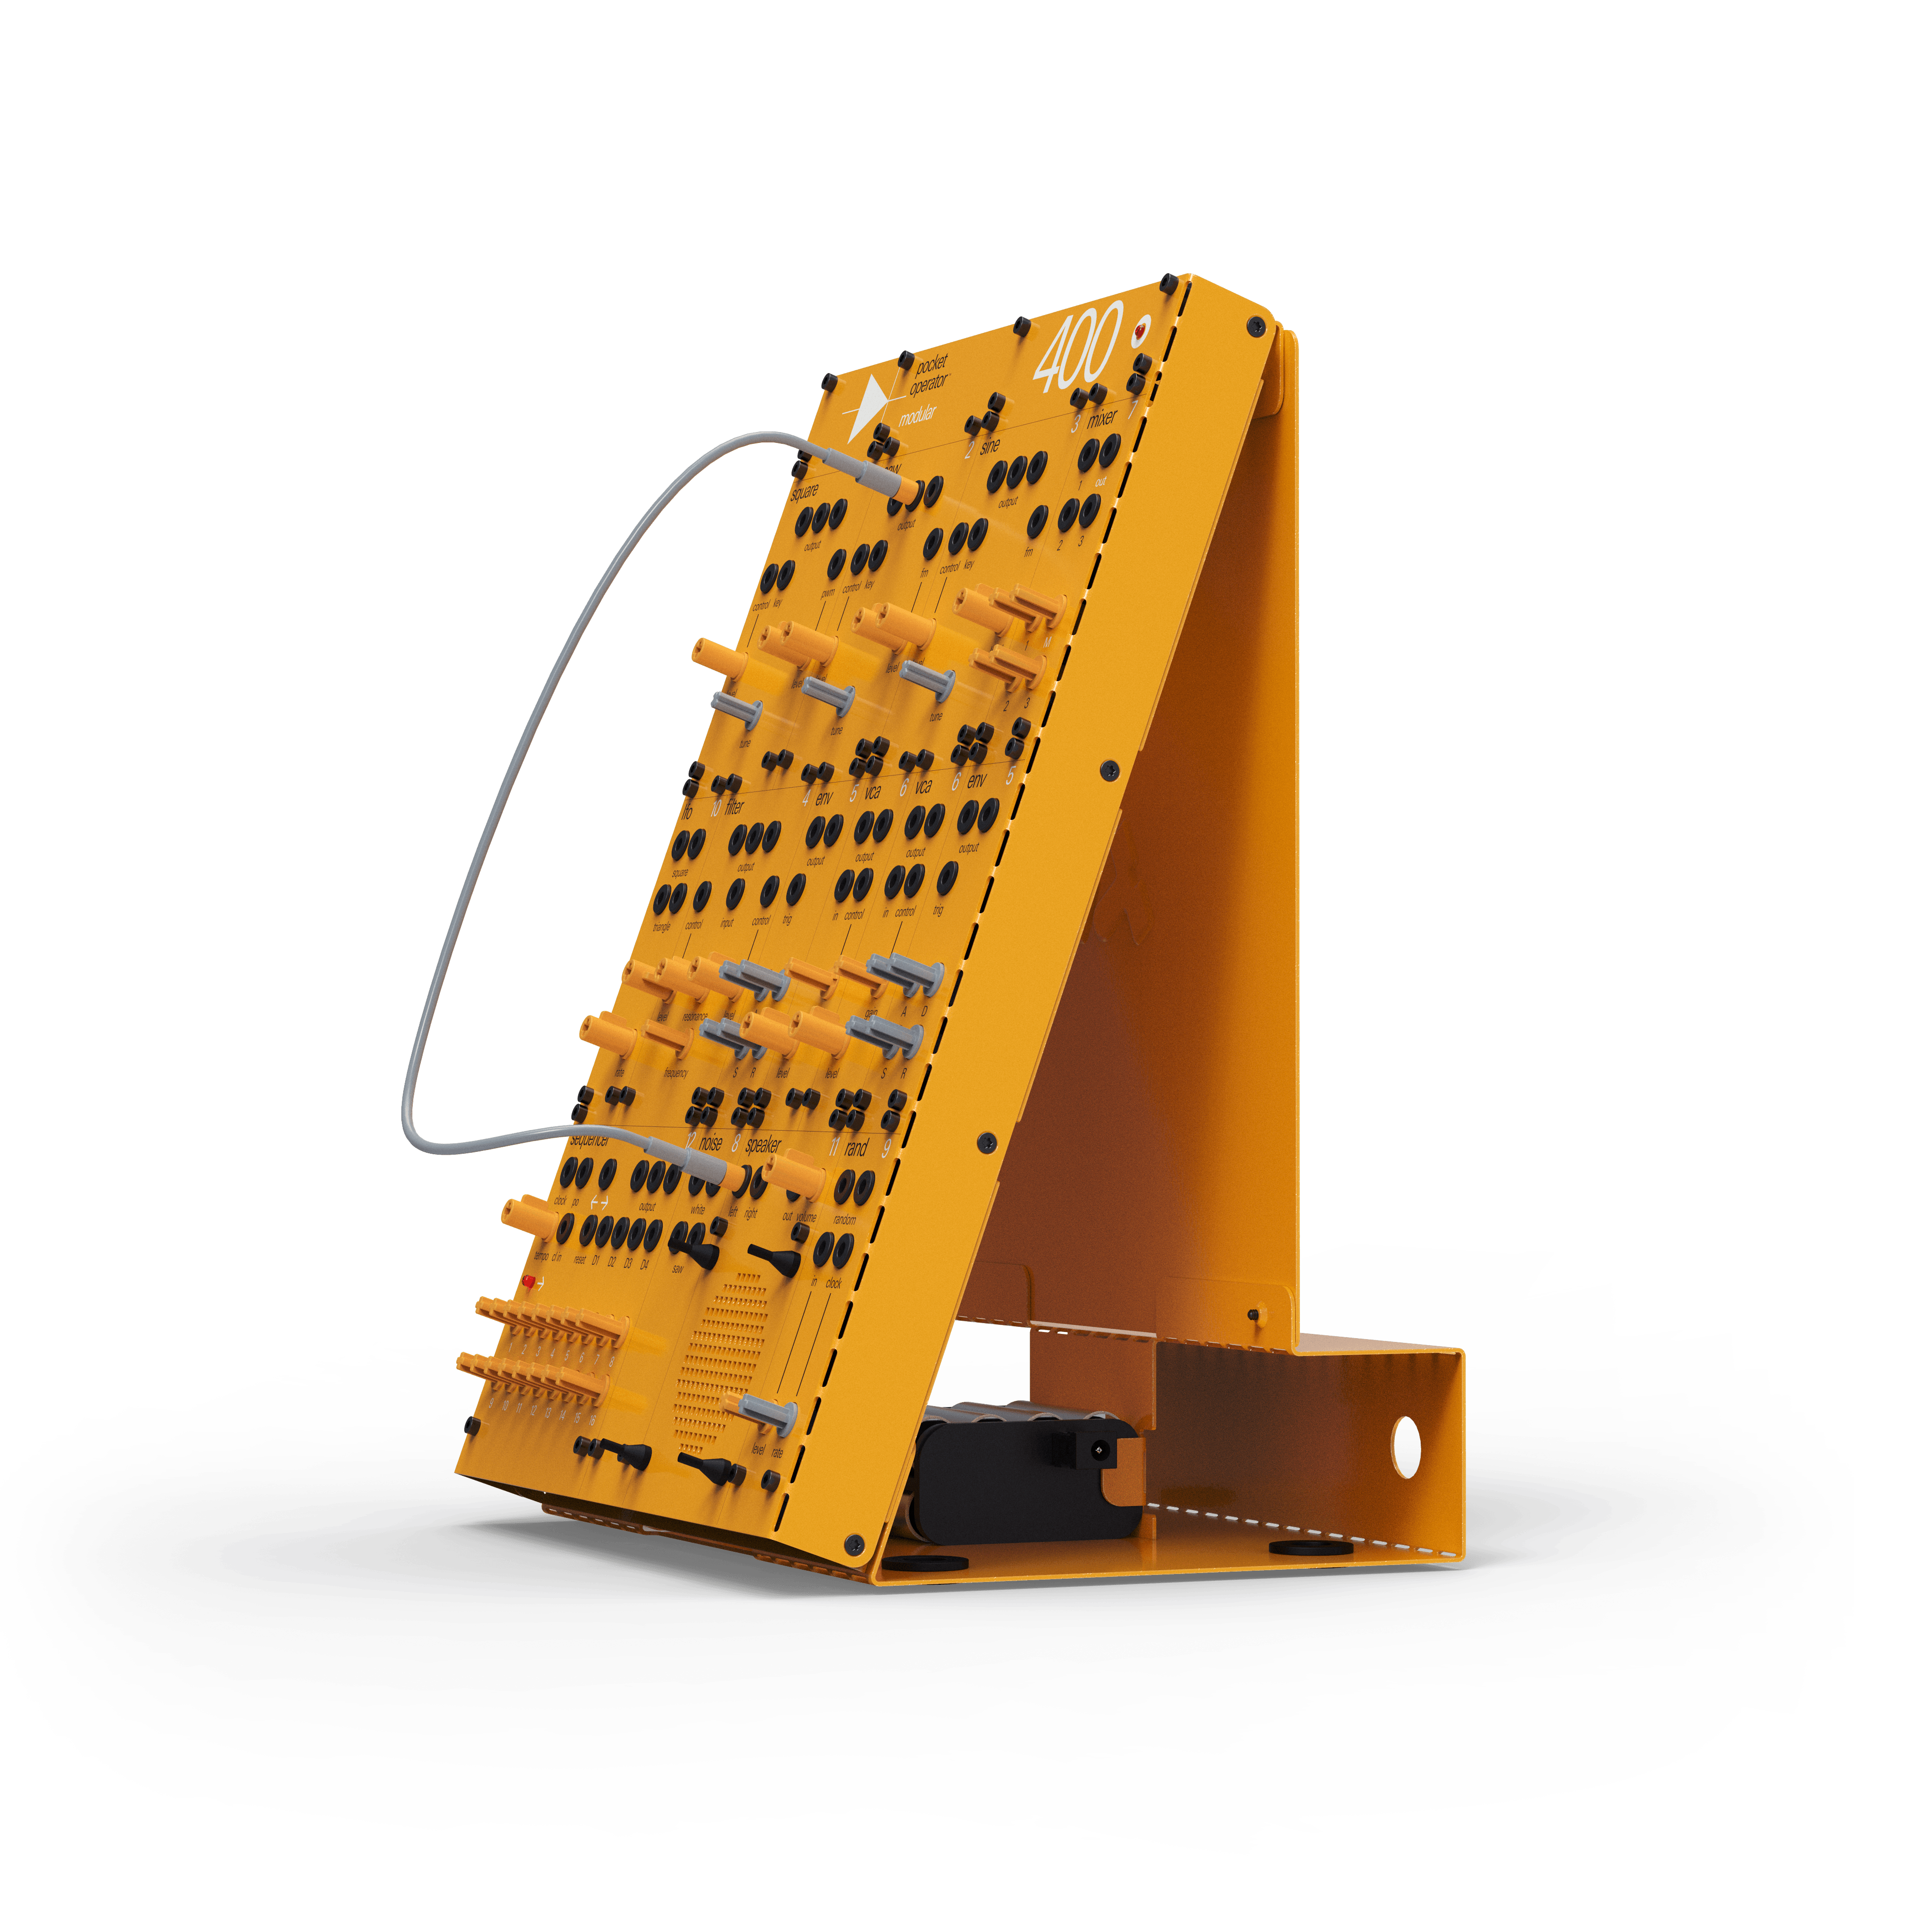 pocket operator modular 16 - teenage engineering